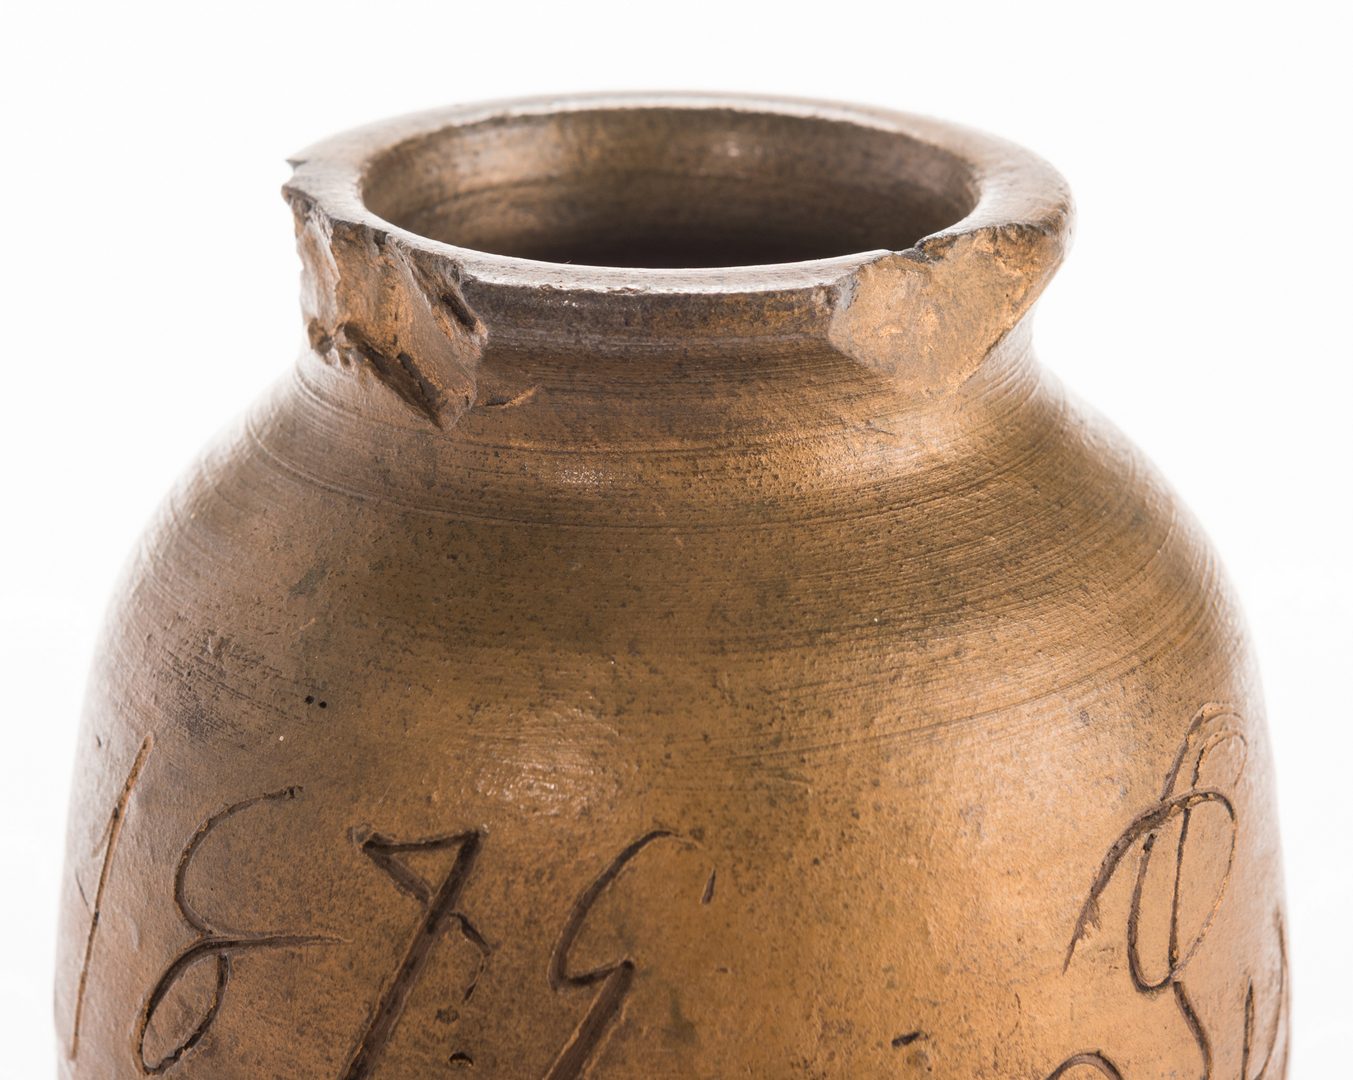 Lot 183: Southwest VA Jesse Vestal Stoneware Jar, Dated